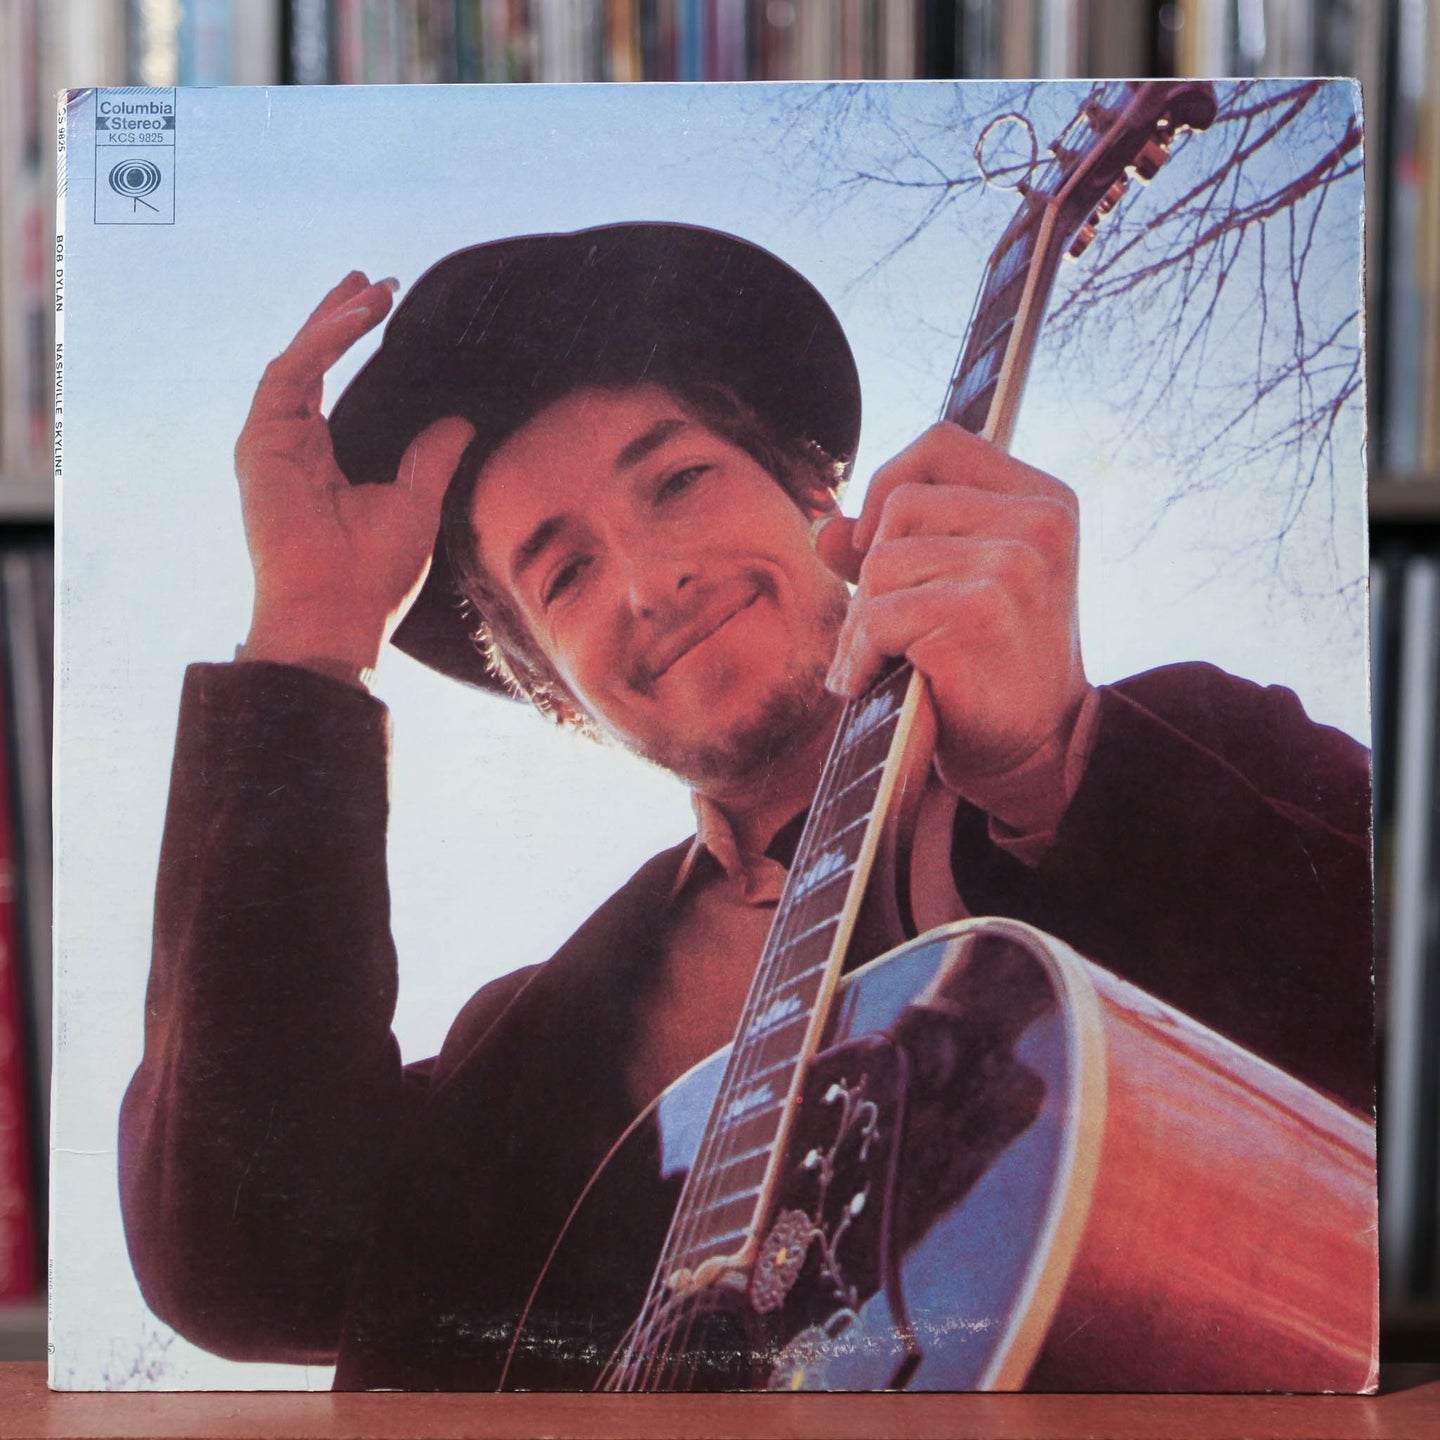 Bob Dylan - Nashville Skyline - 1973 Columbia, VG/VG+